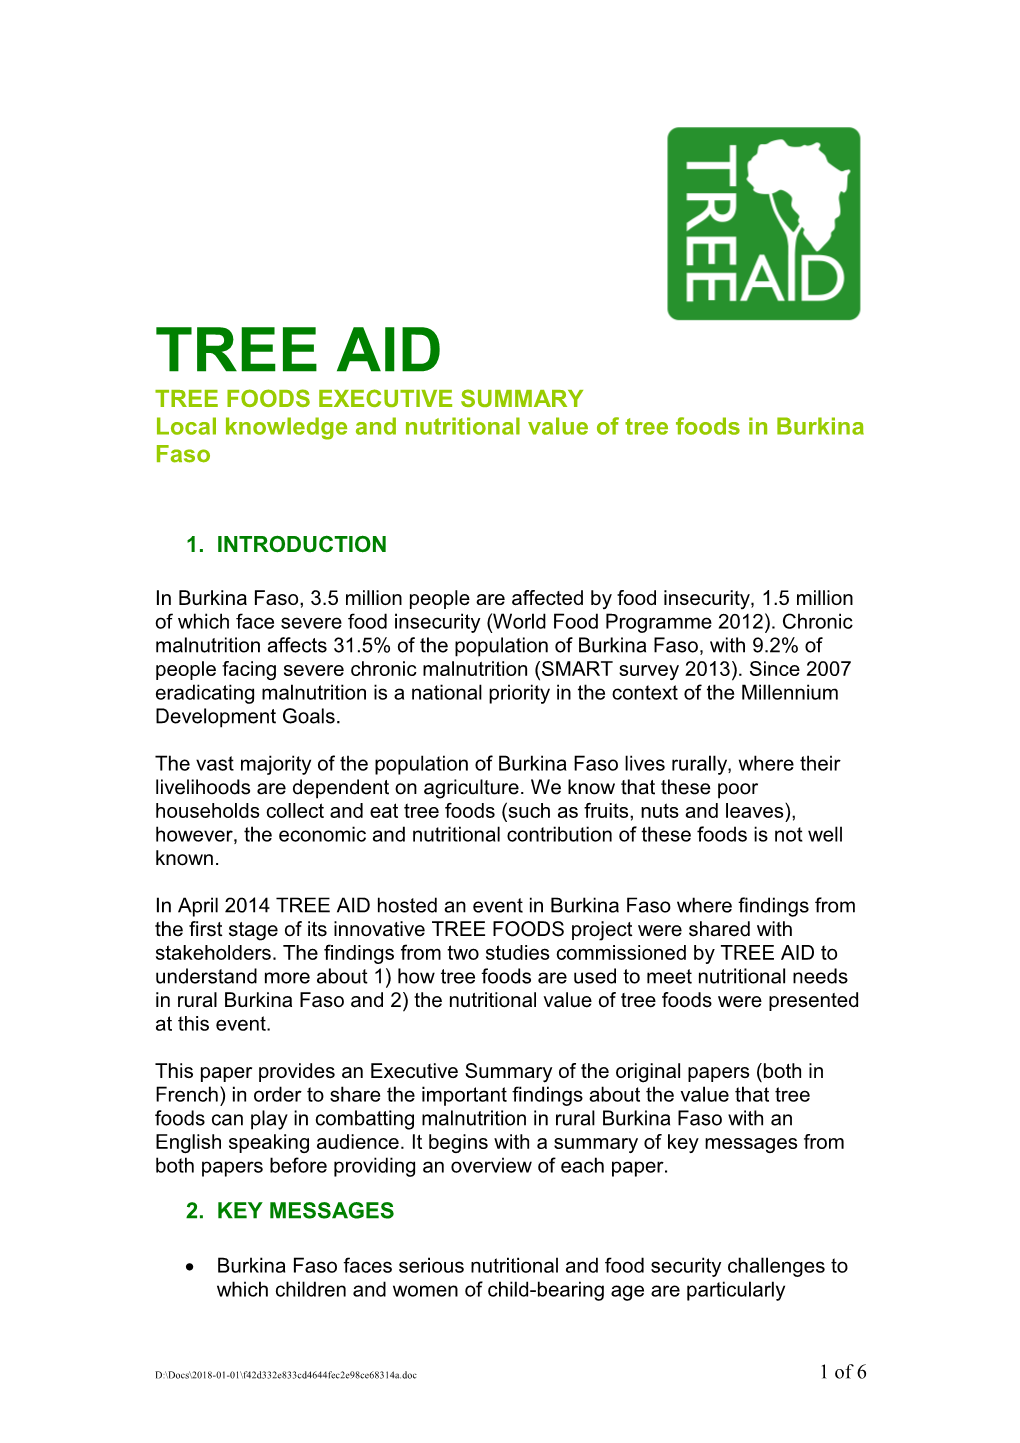 Tree Aid Statement